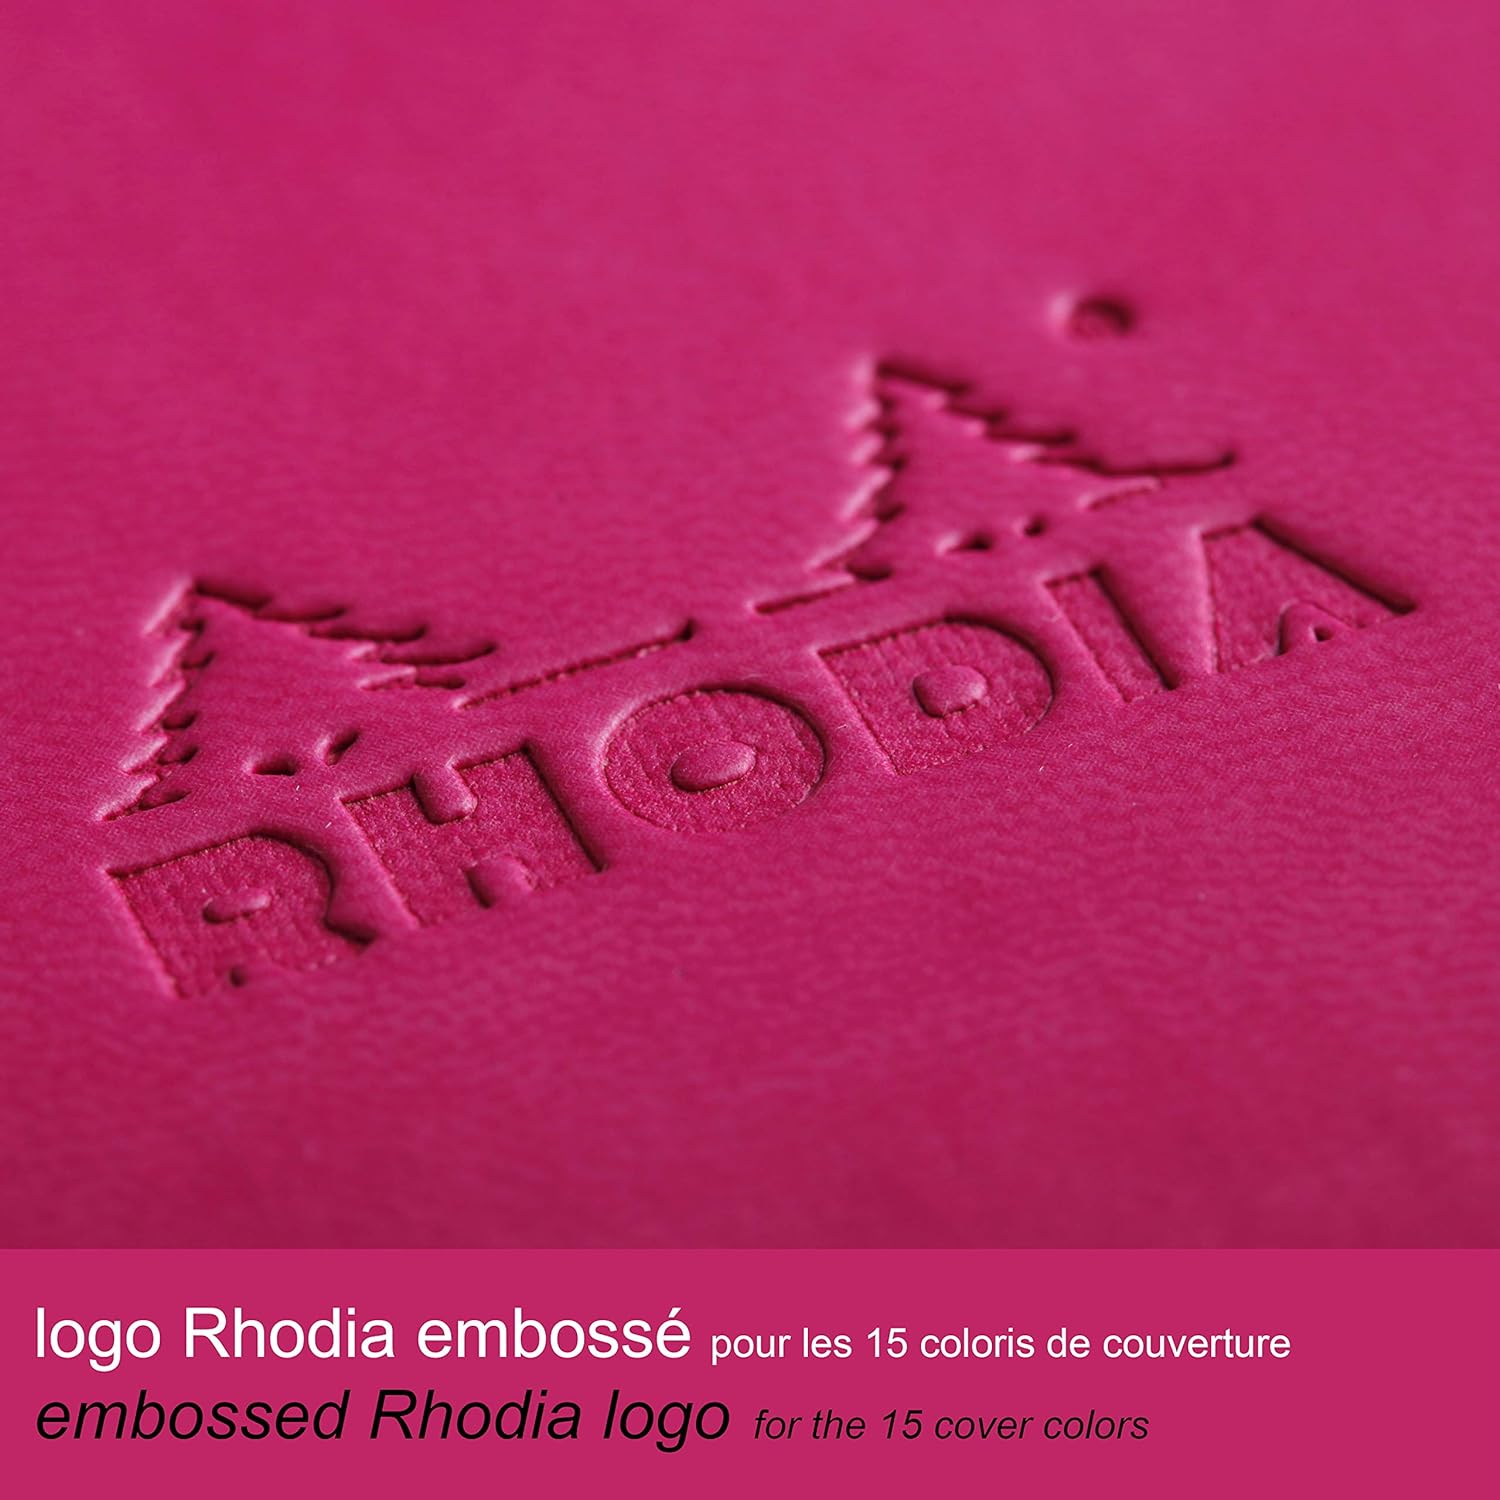 RHODIArama Webnotebook A6 Ivory Lined Hardcover-Raspberry